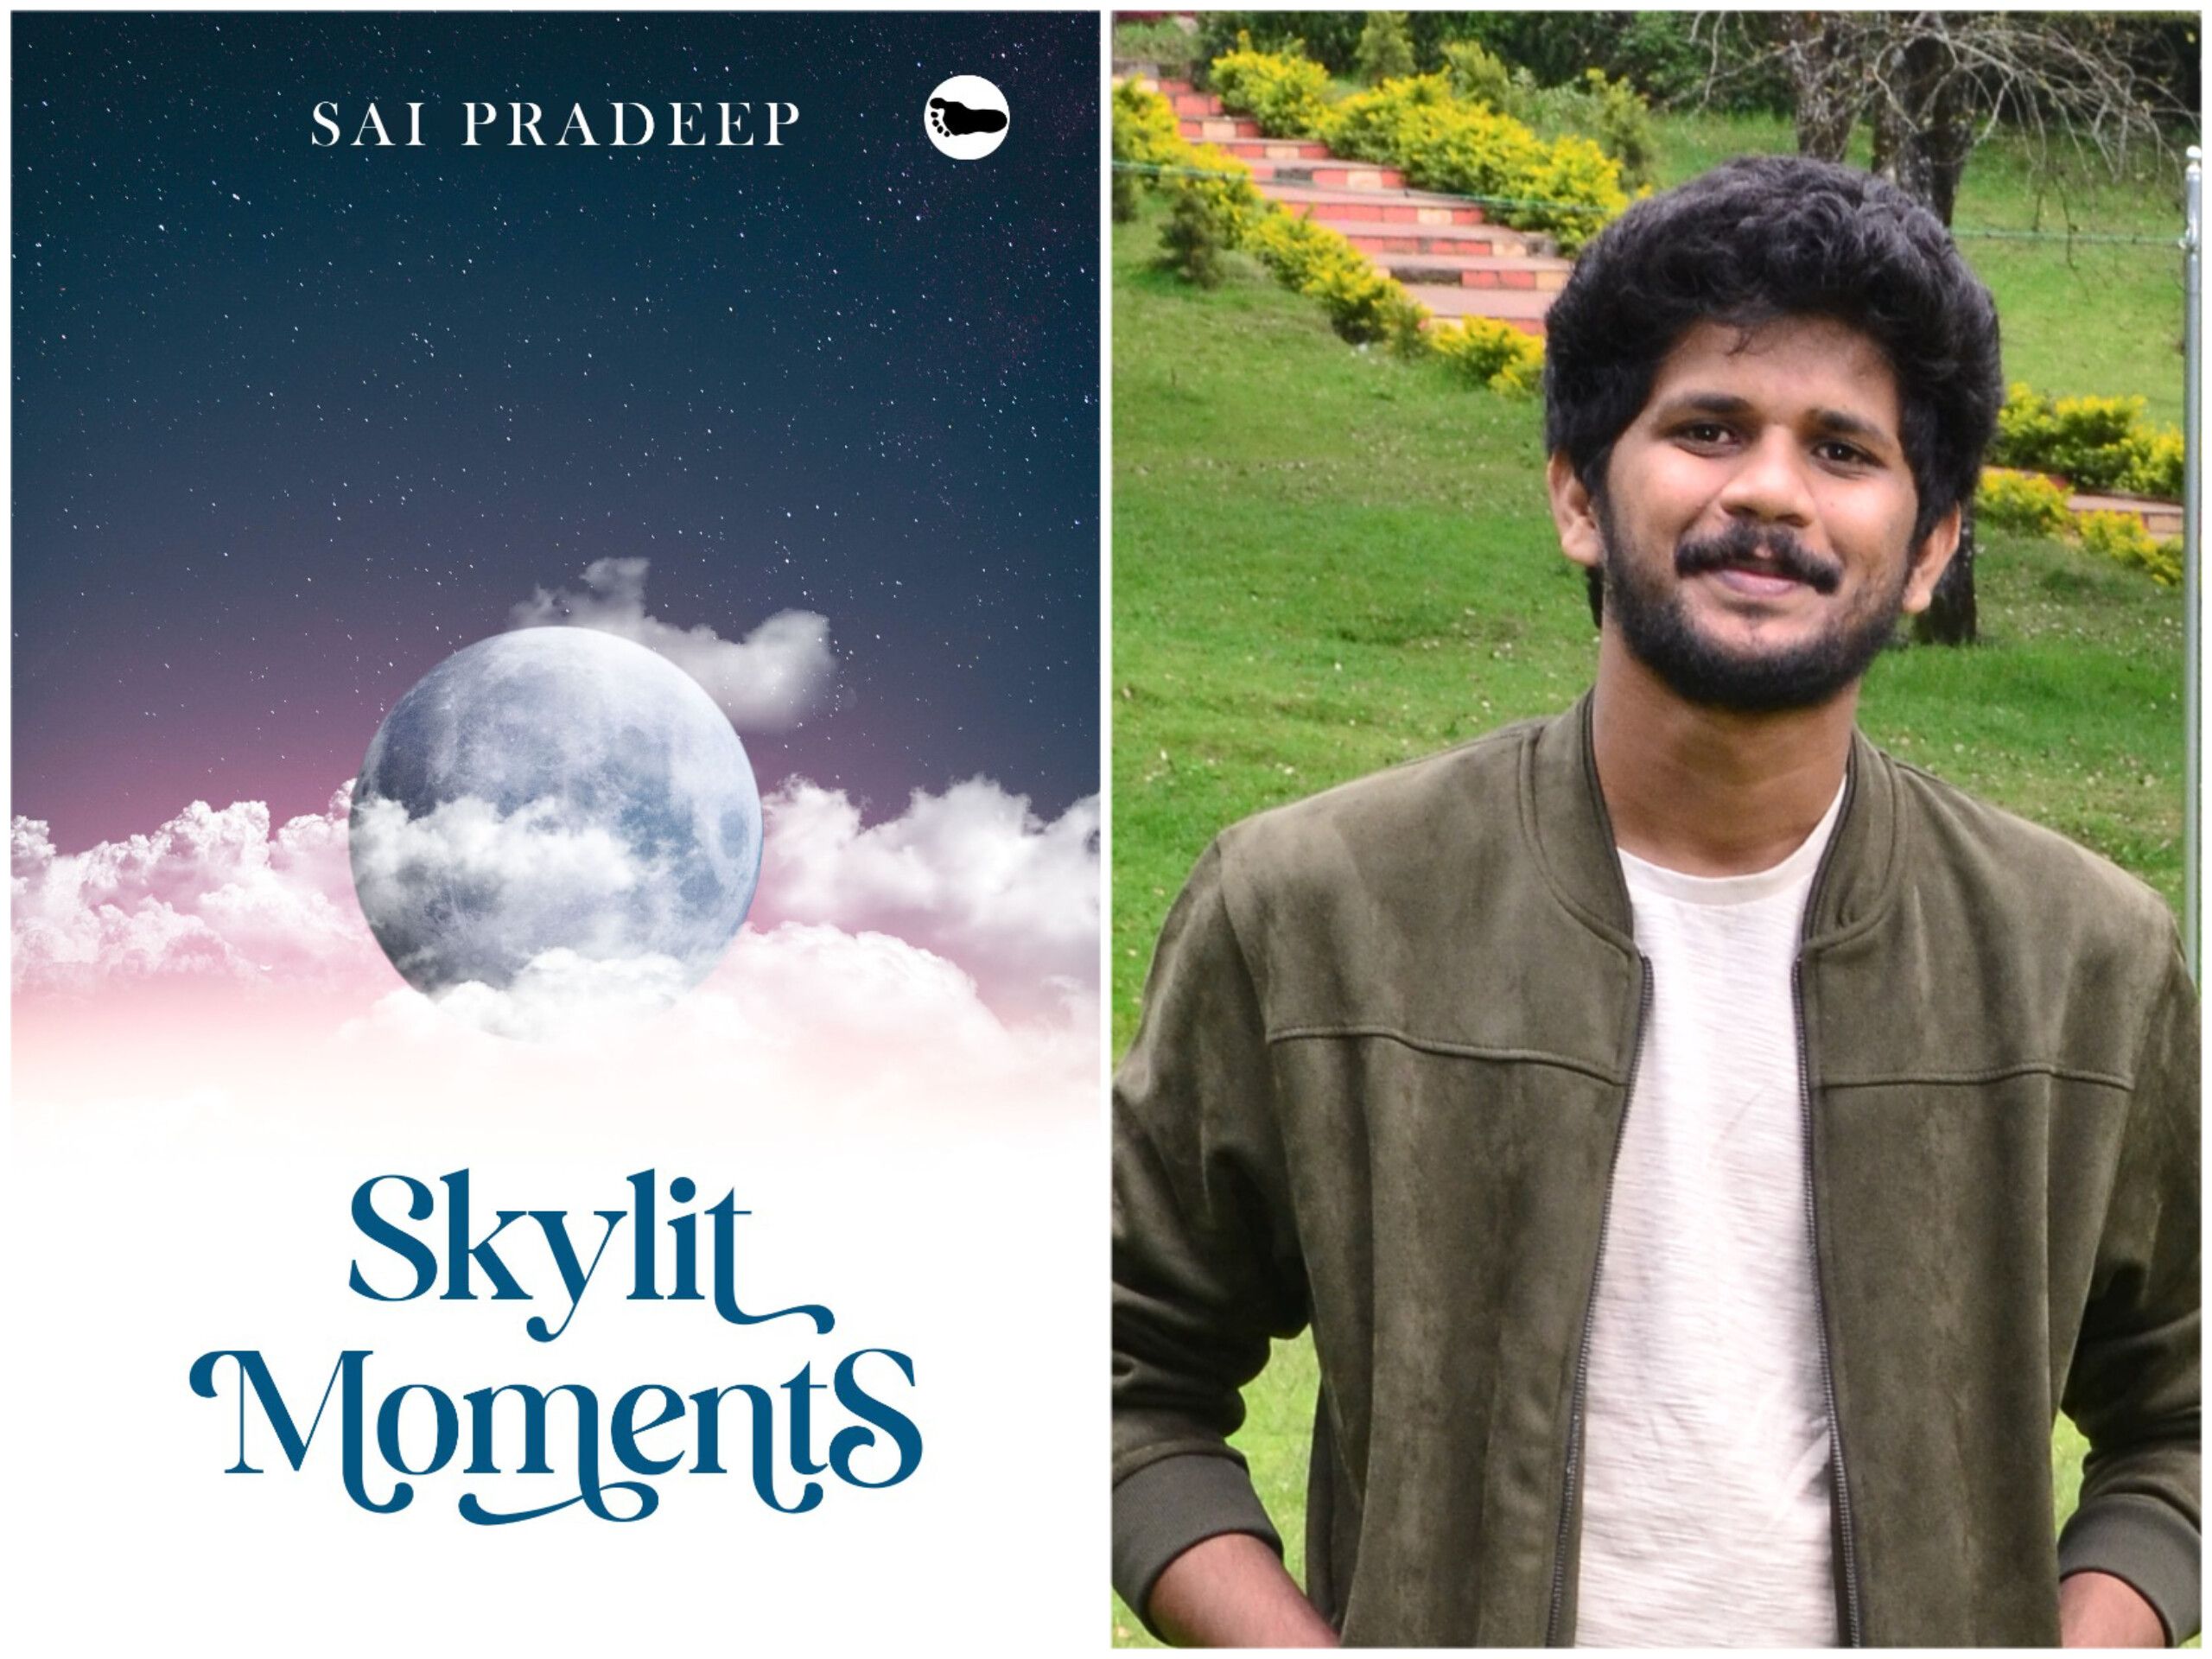 Skylit Moments, Sai Pradeep